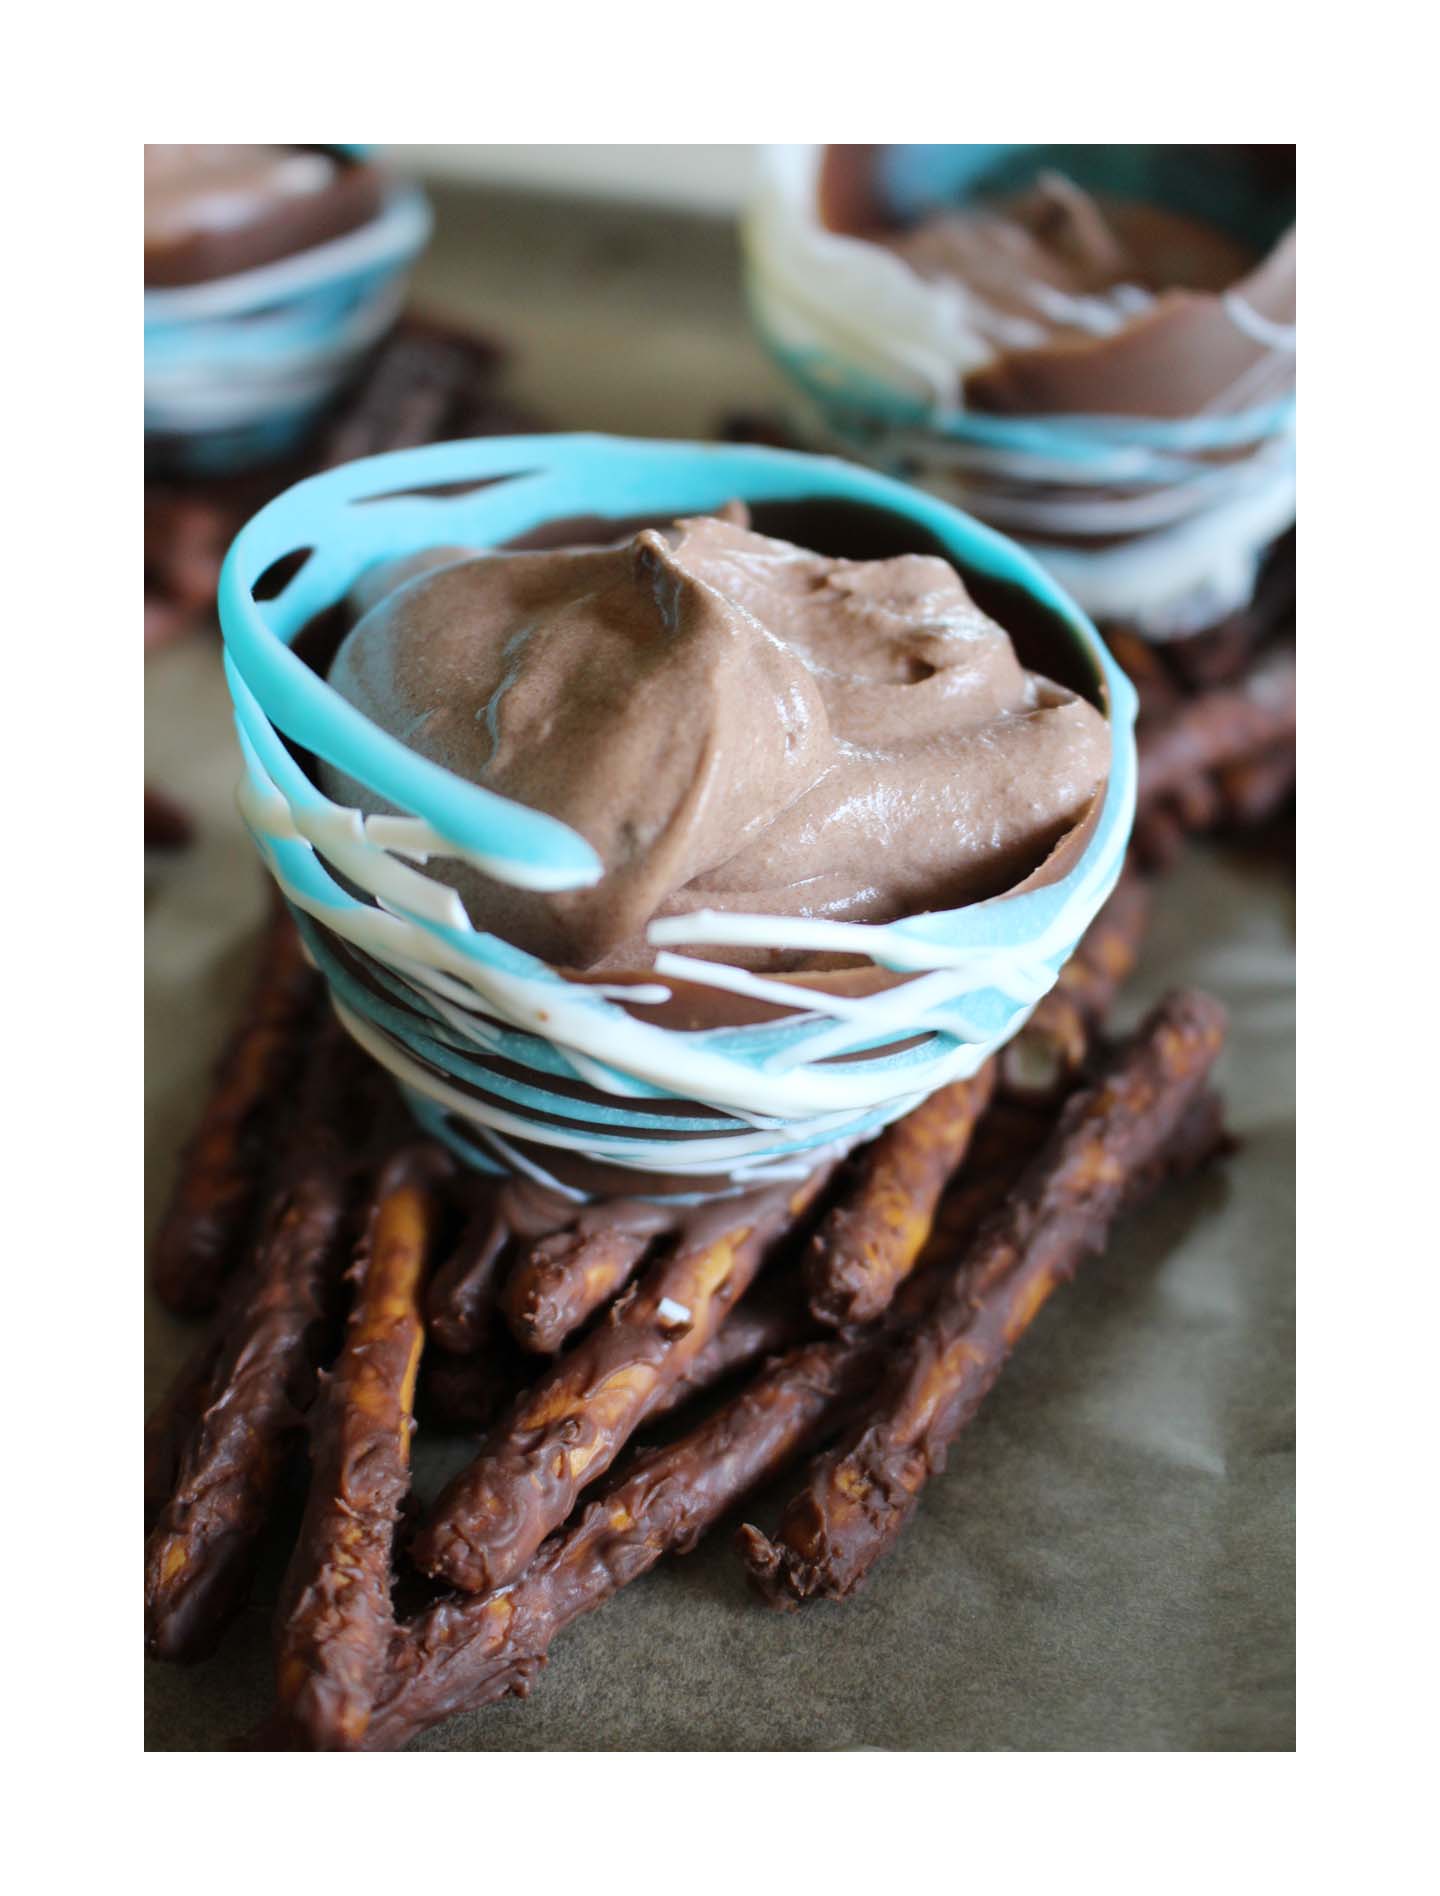 Chocolate "Egg on Nest" for Easter